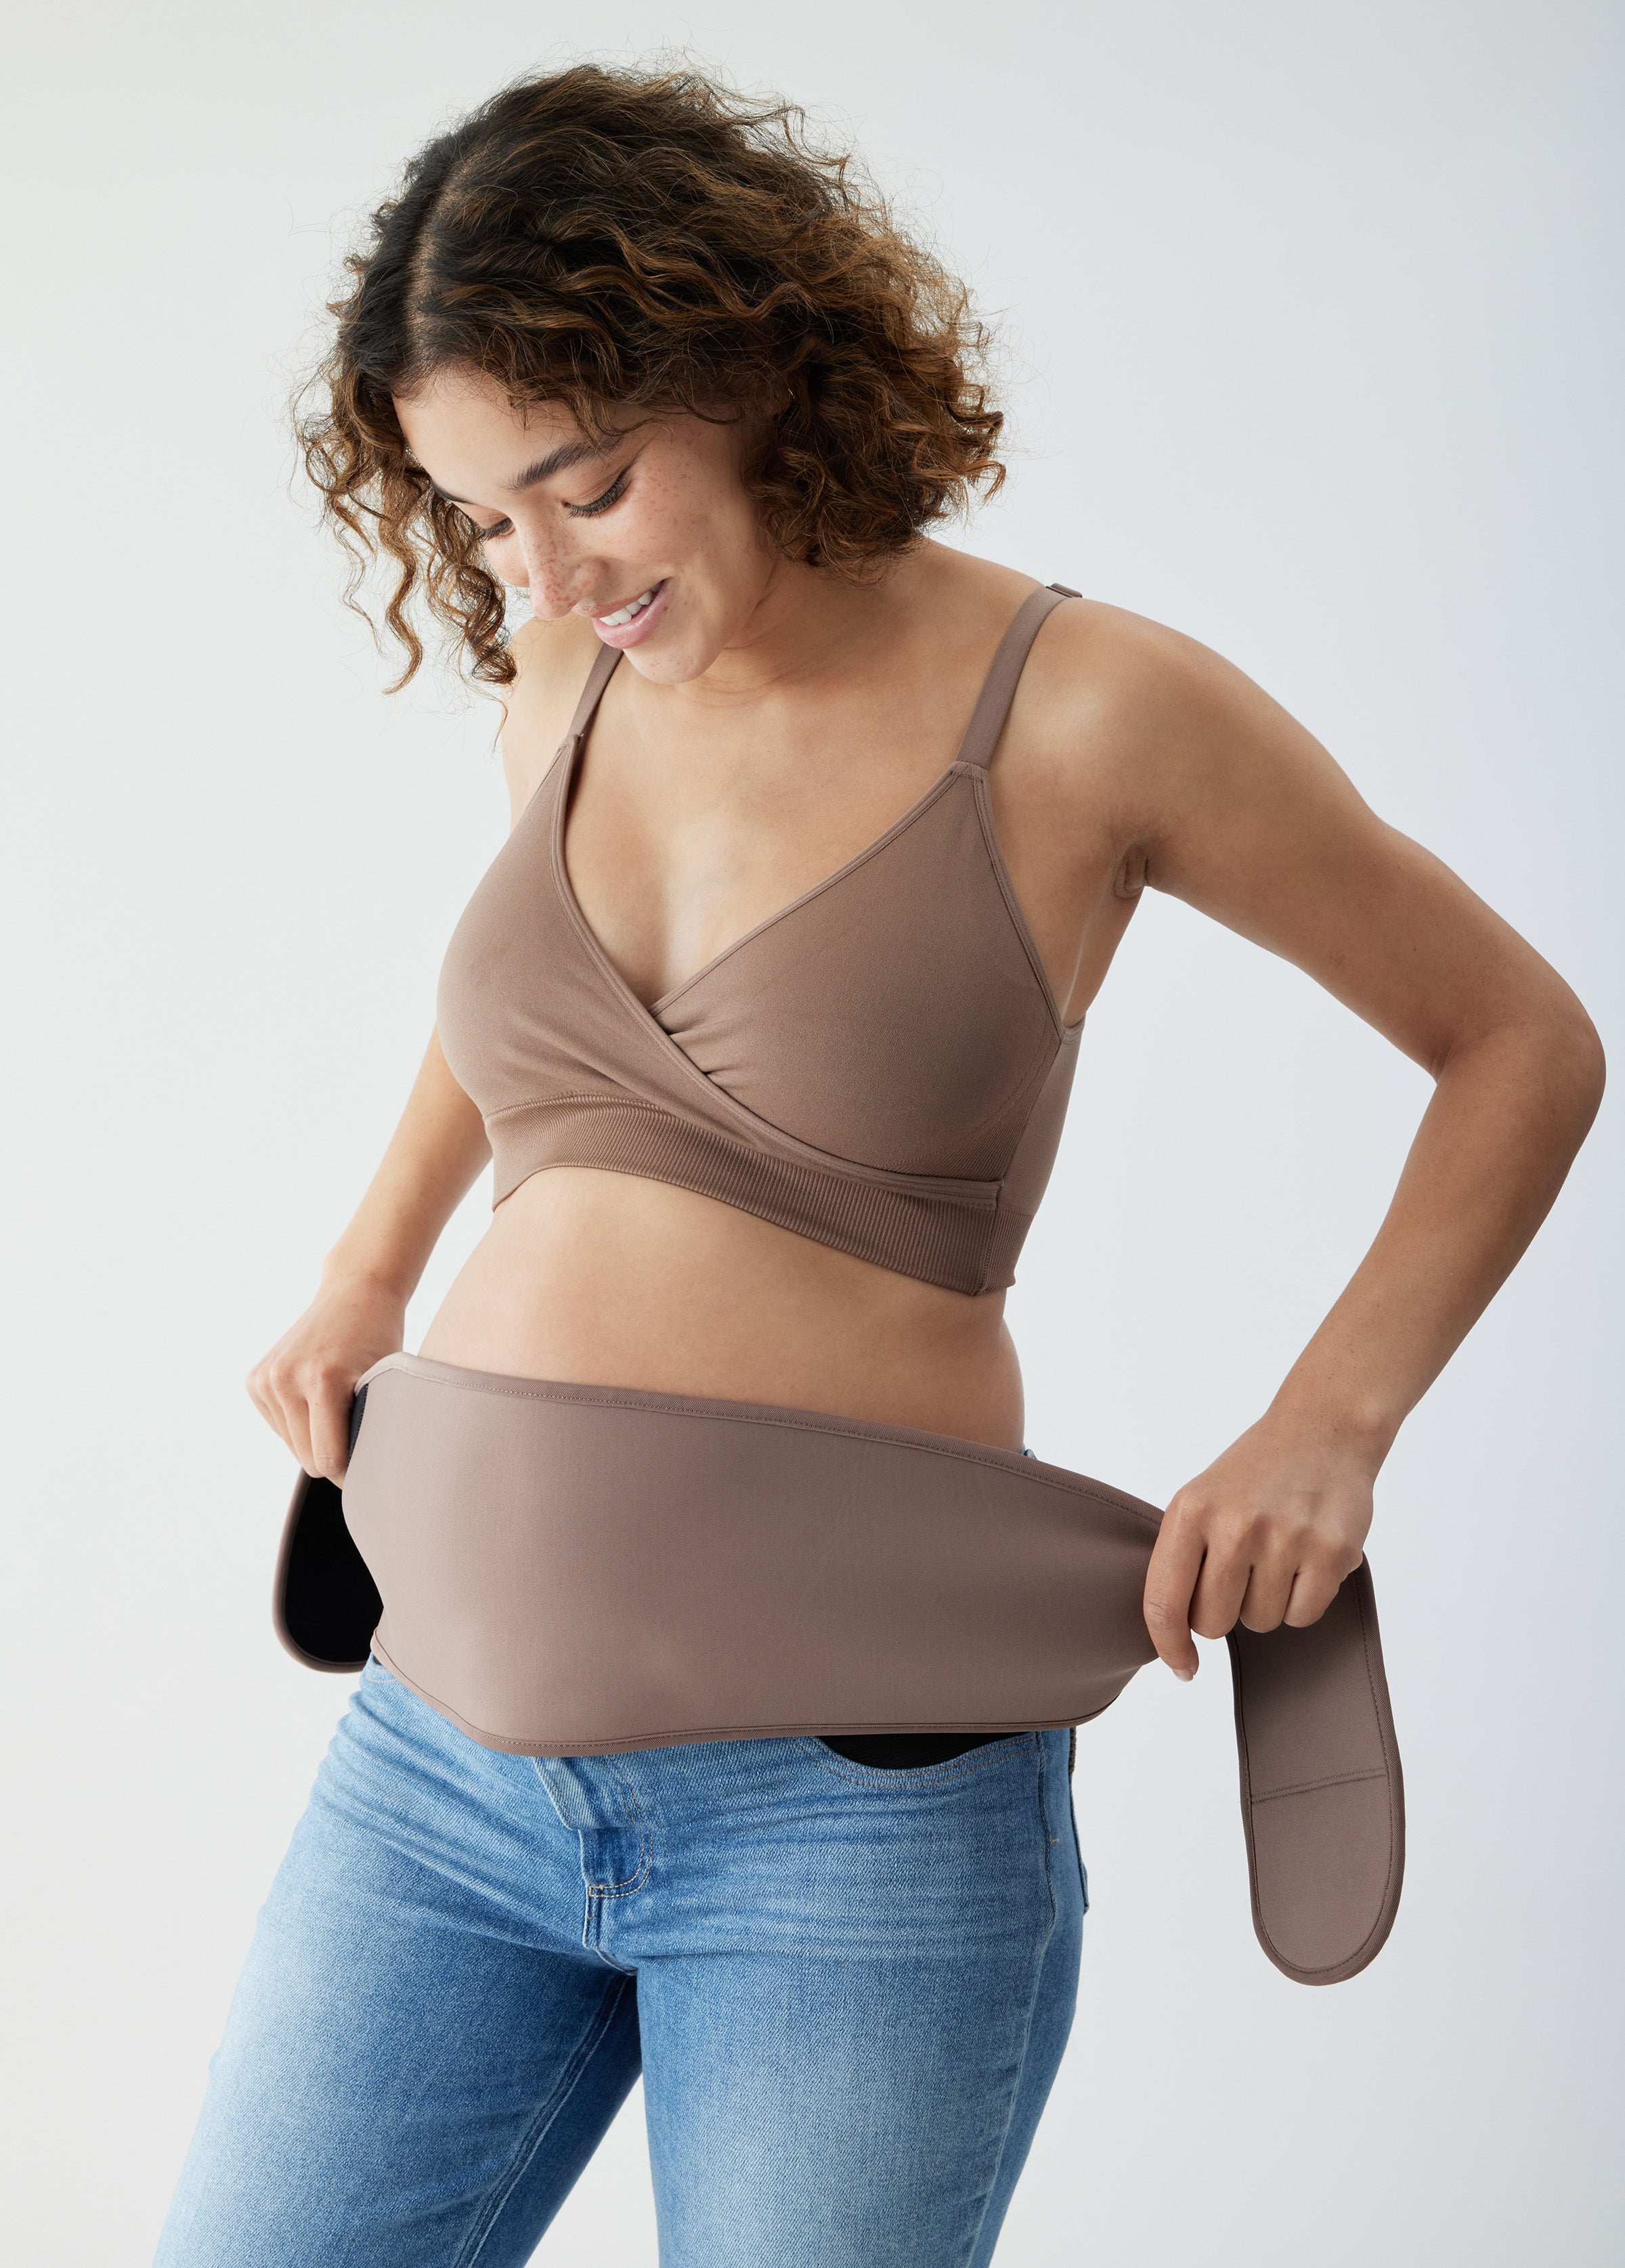 Belts Clearance Pregnancy Belly Support Band Belt Pregnancy